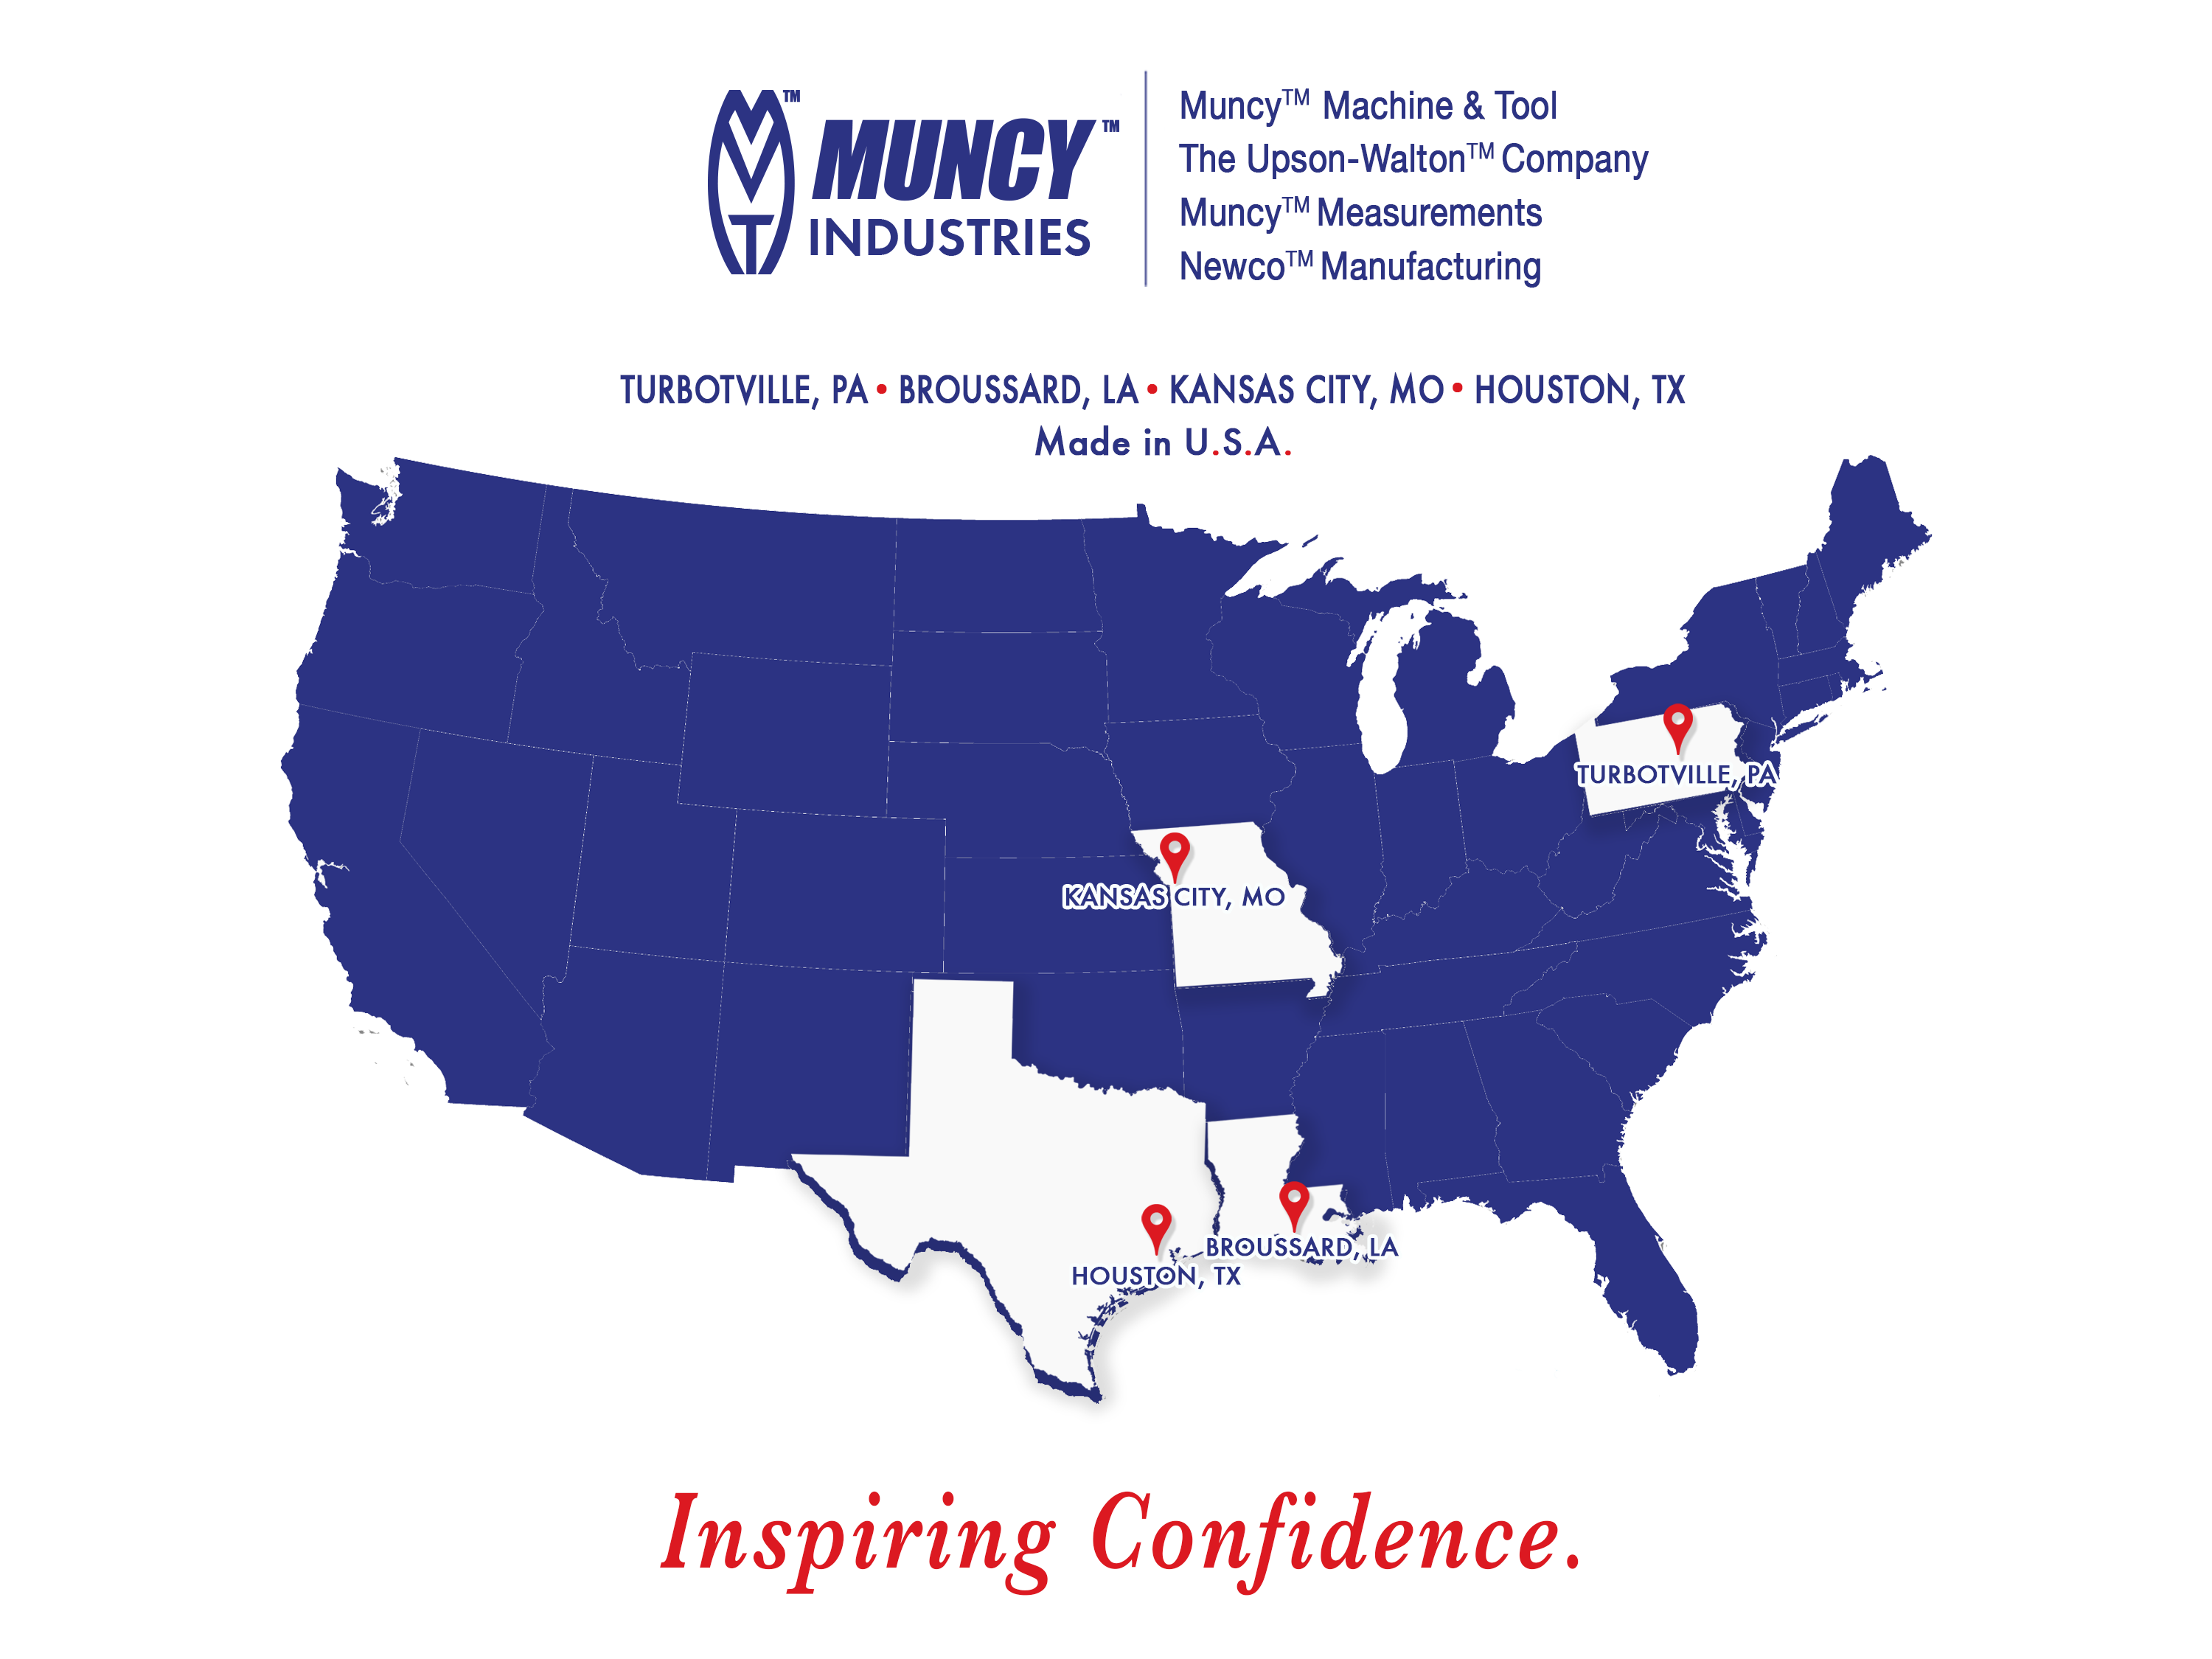 Muncy Industries: Turbotville, PA - Broussard, LA - Kansas City, MO - Houston, TX